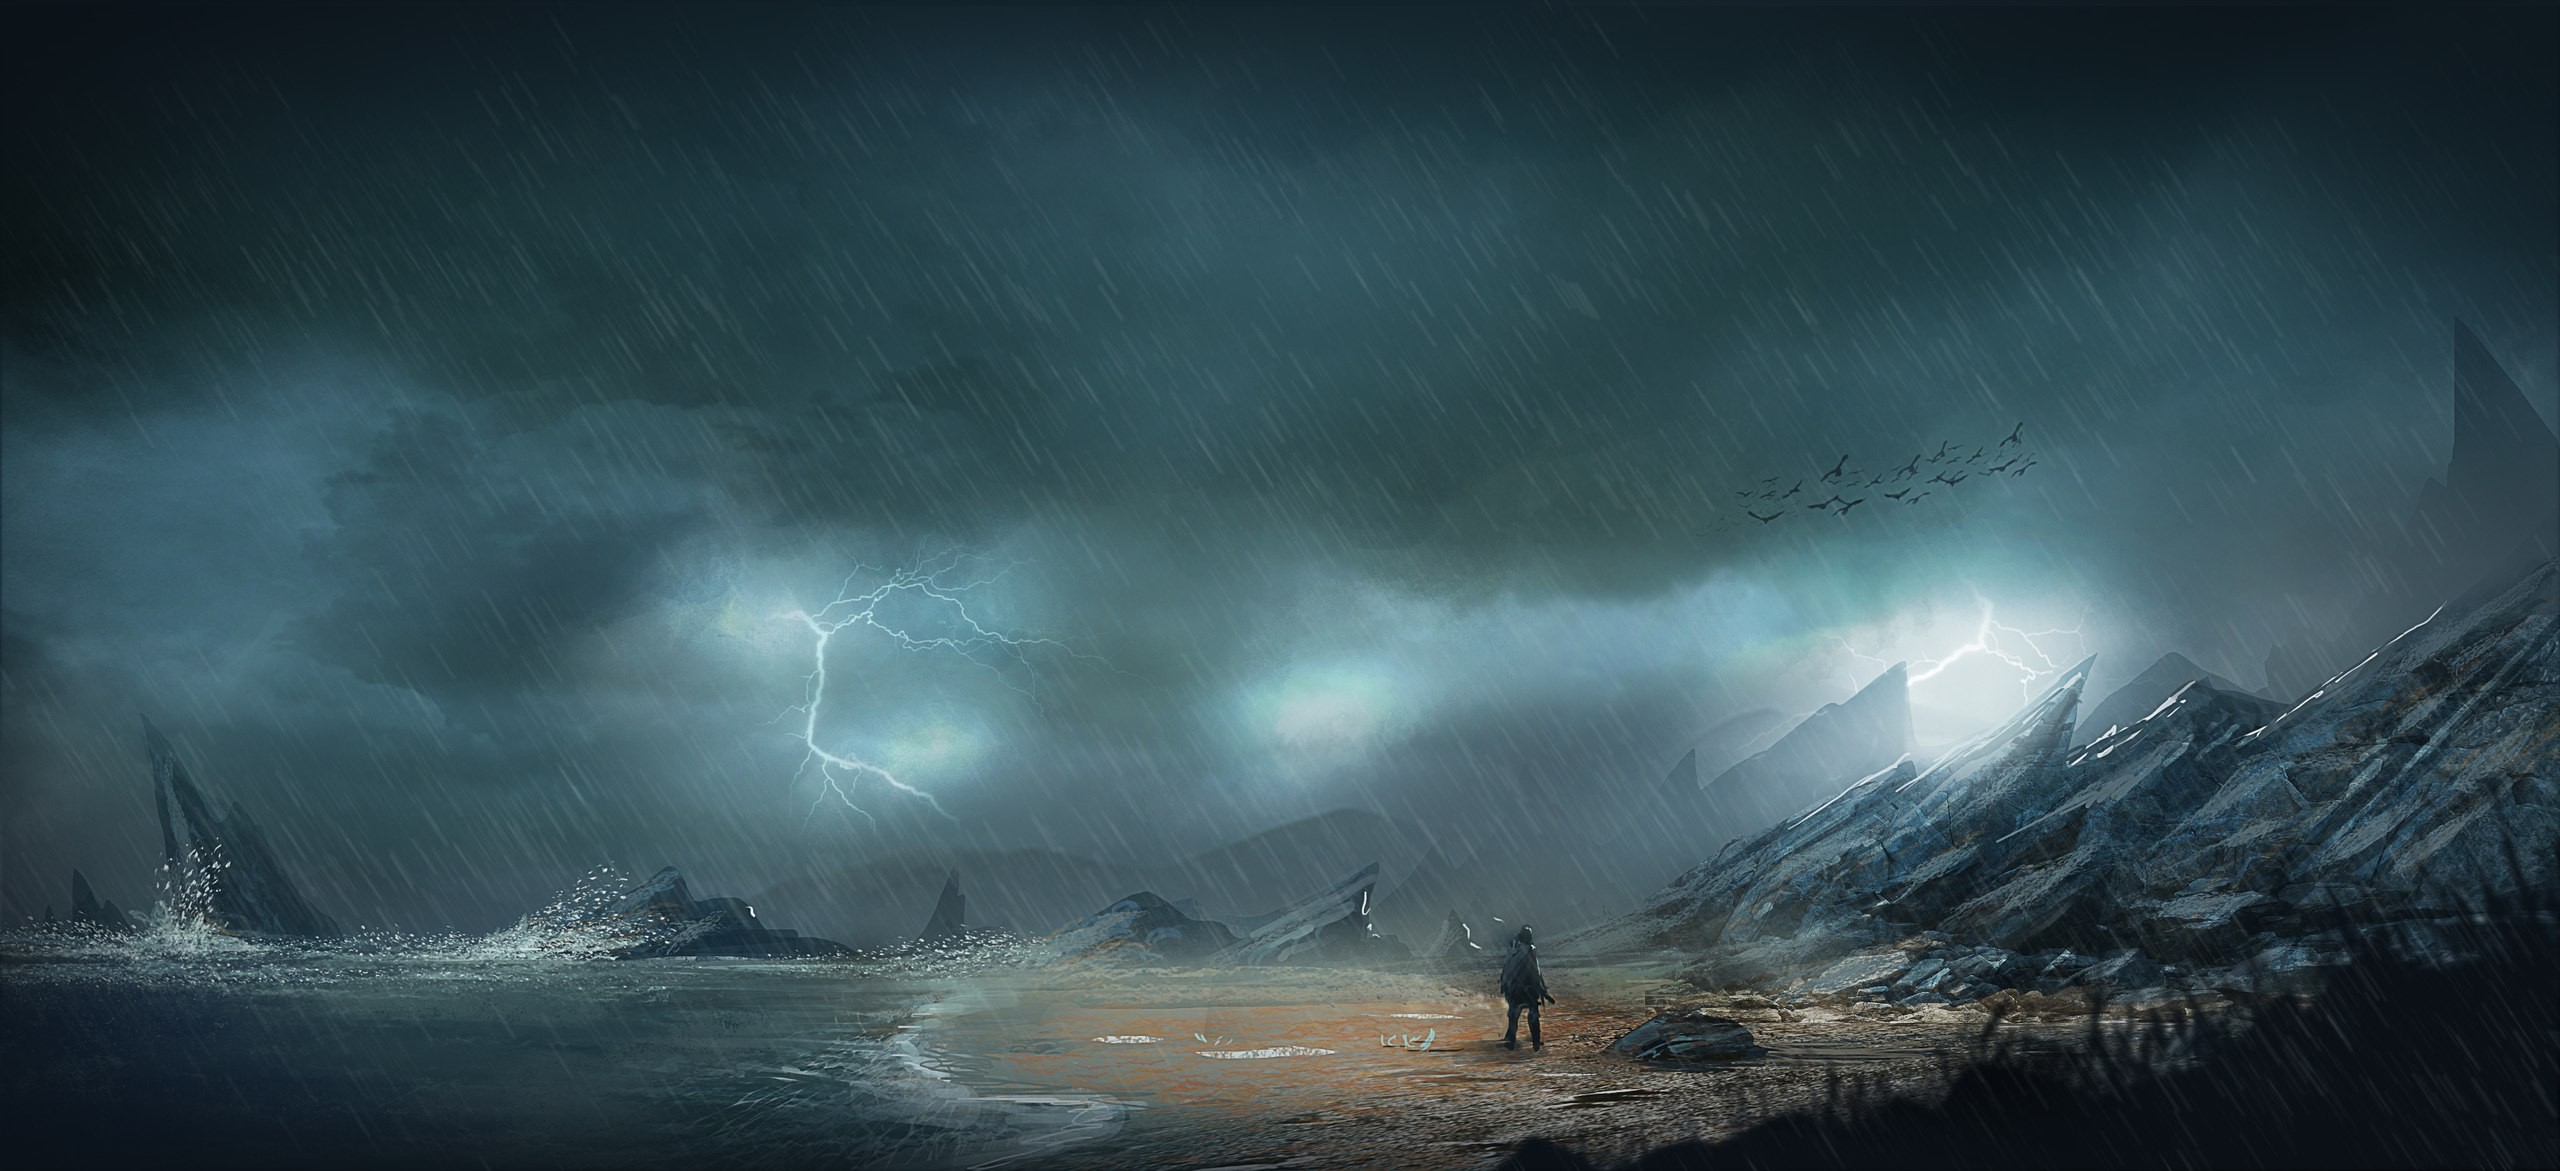 General 2560x1171 storm apocalyptic digital art futuristic night rain shore lightning